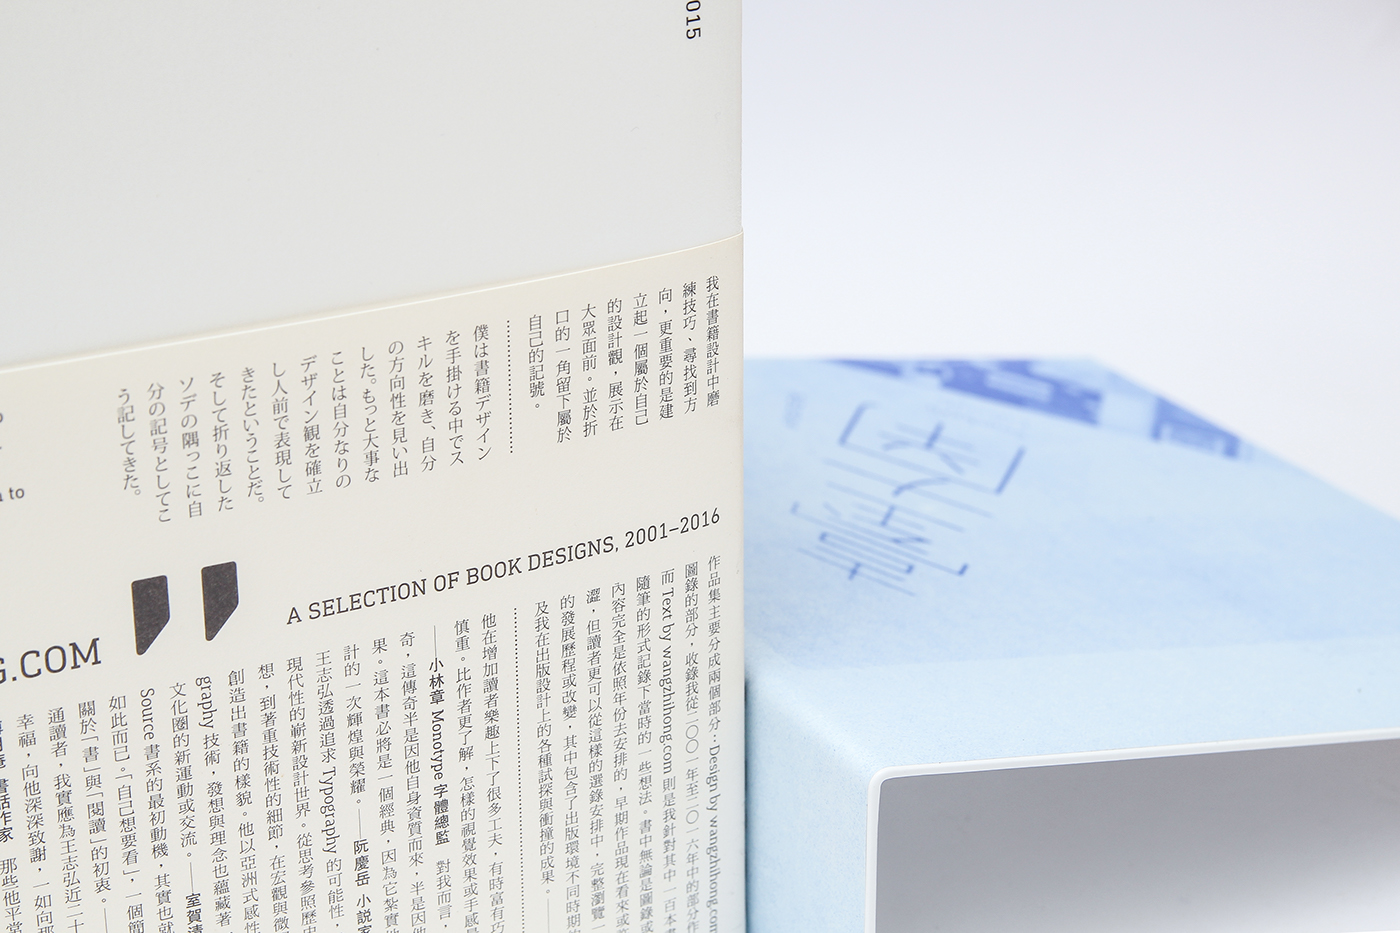 ILLUSTRATION  tainan Exhibition  book design Blueprint graphic design  city taiwan